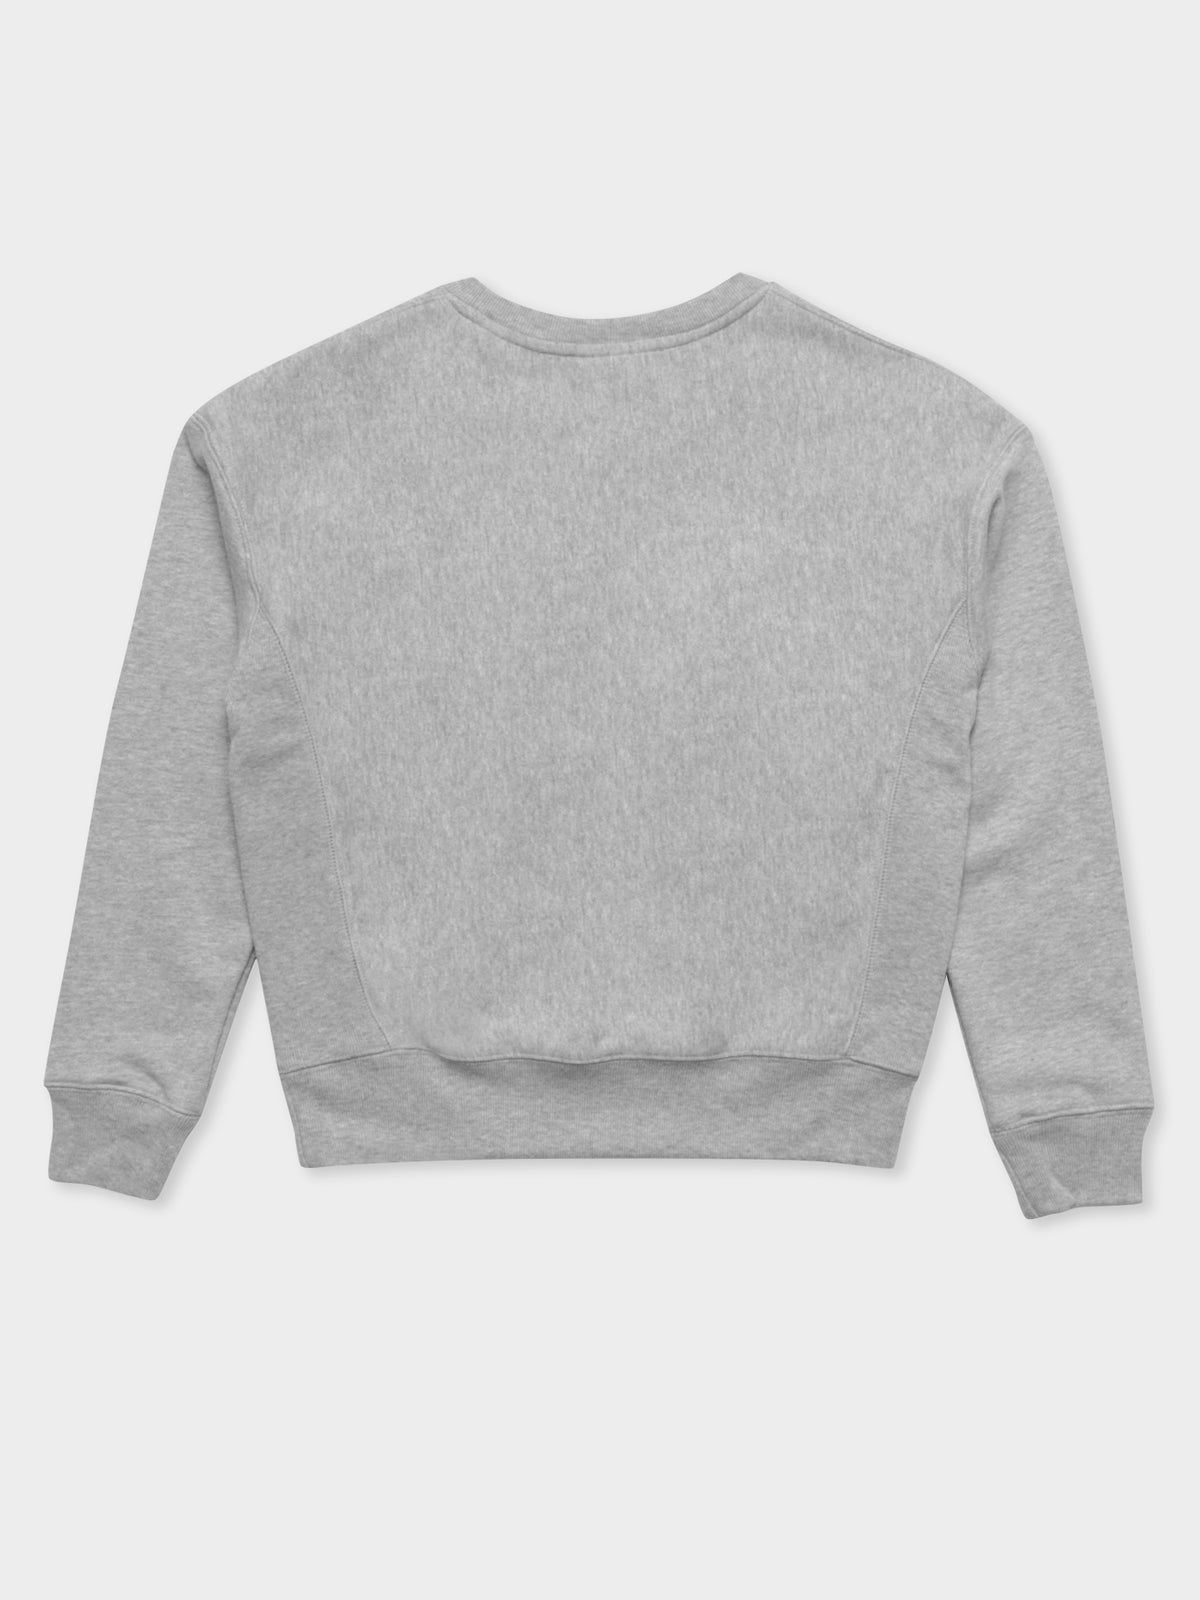 Reverse Weave Crew Sweatshirt in Oxford Grey Heather